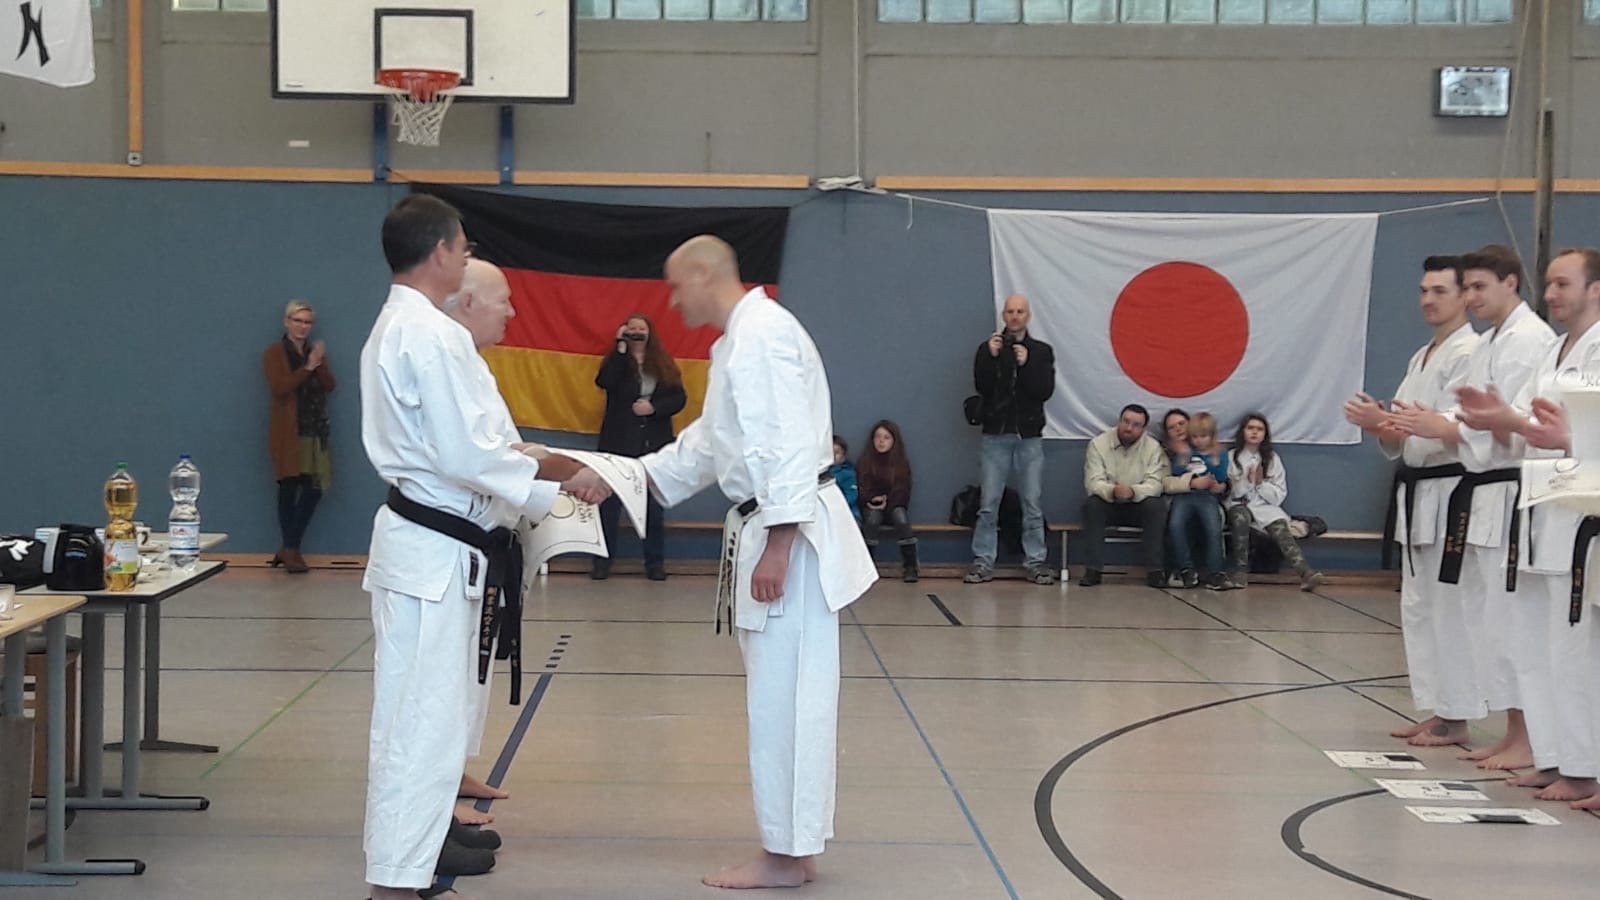 Karate Dan Prüfung von René Roese in Waltrop am 11.November 2019